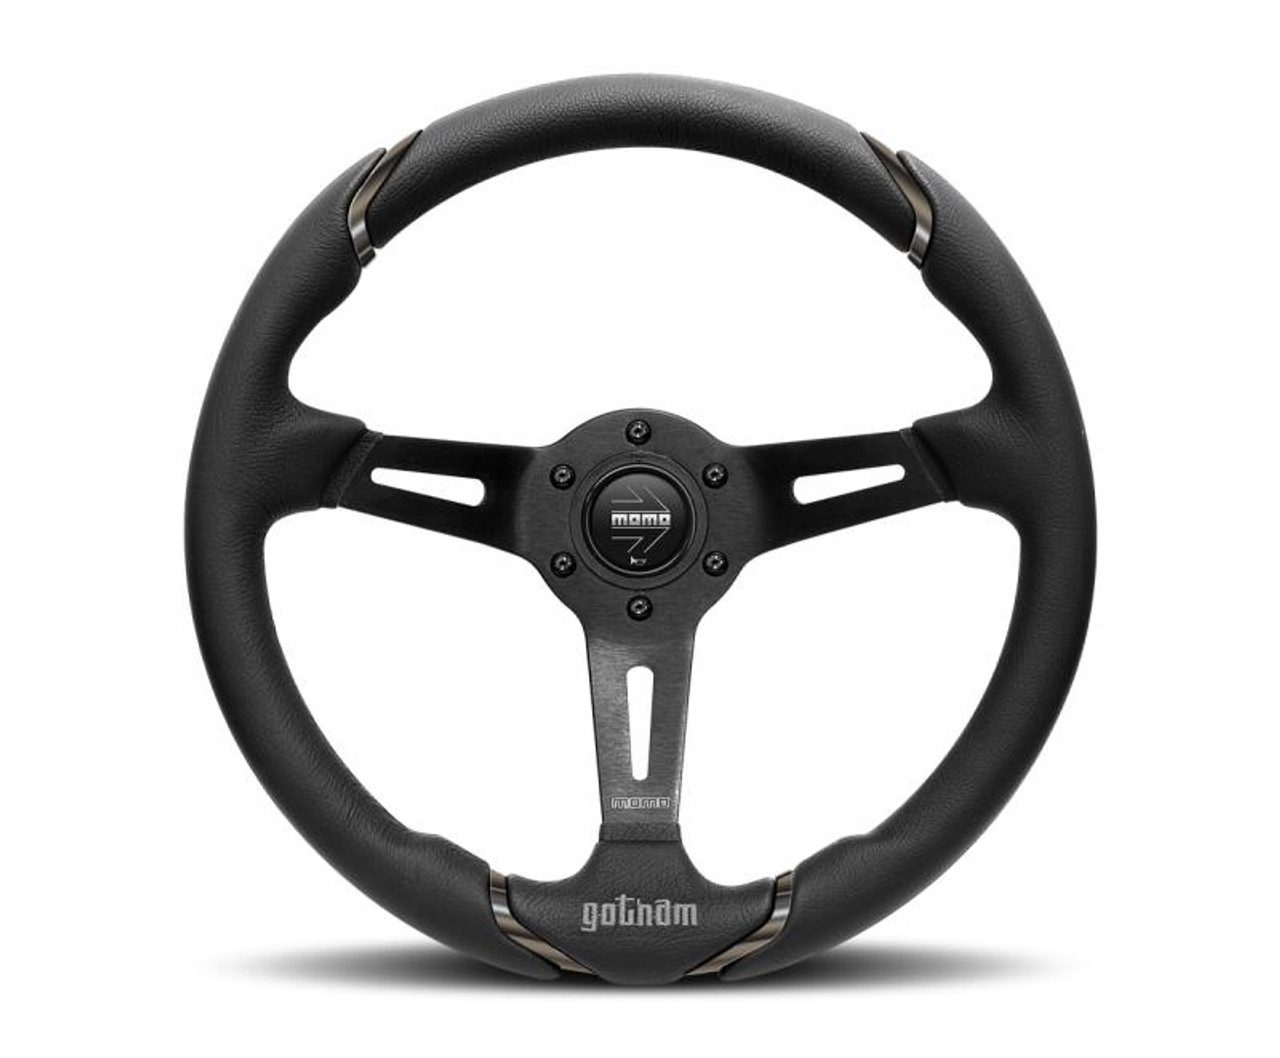 MOMO Momo Gotham Steering Wheel 350 mm - Black Leather/Black Spokes - GOT35BK0B 